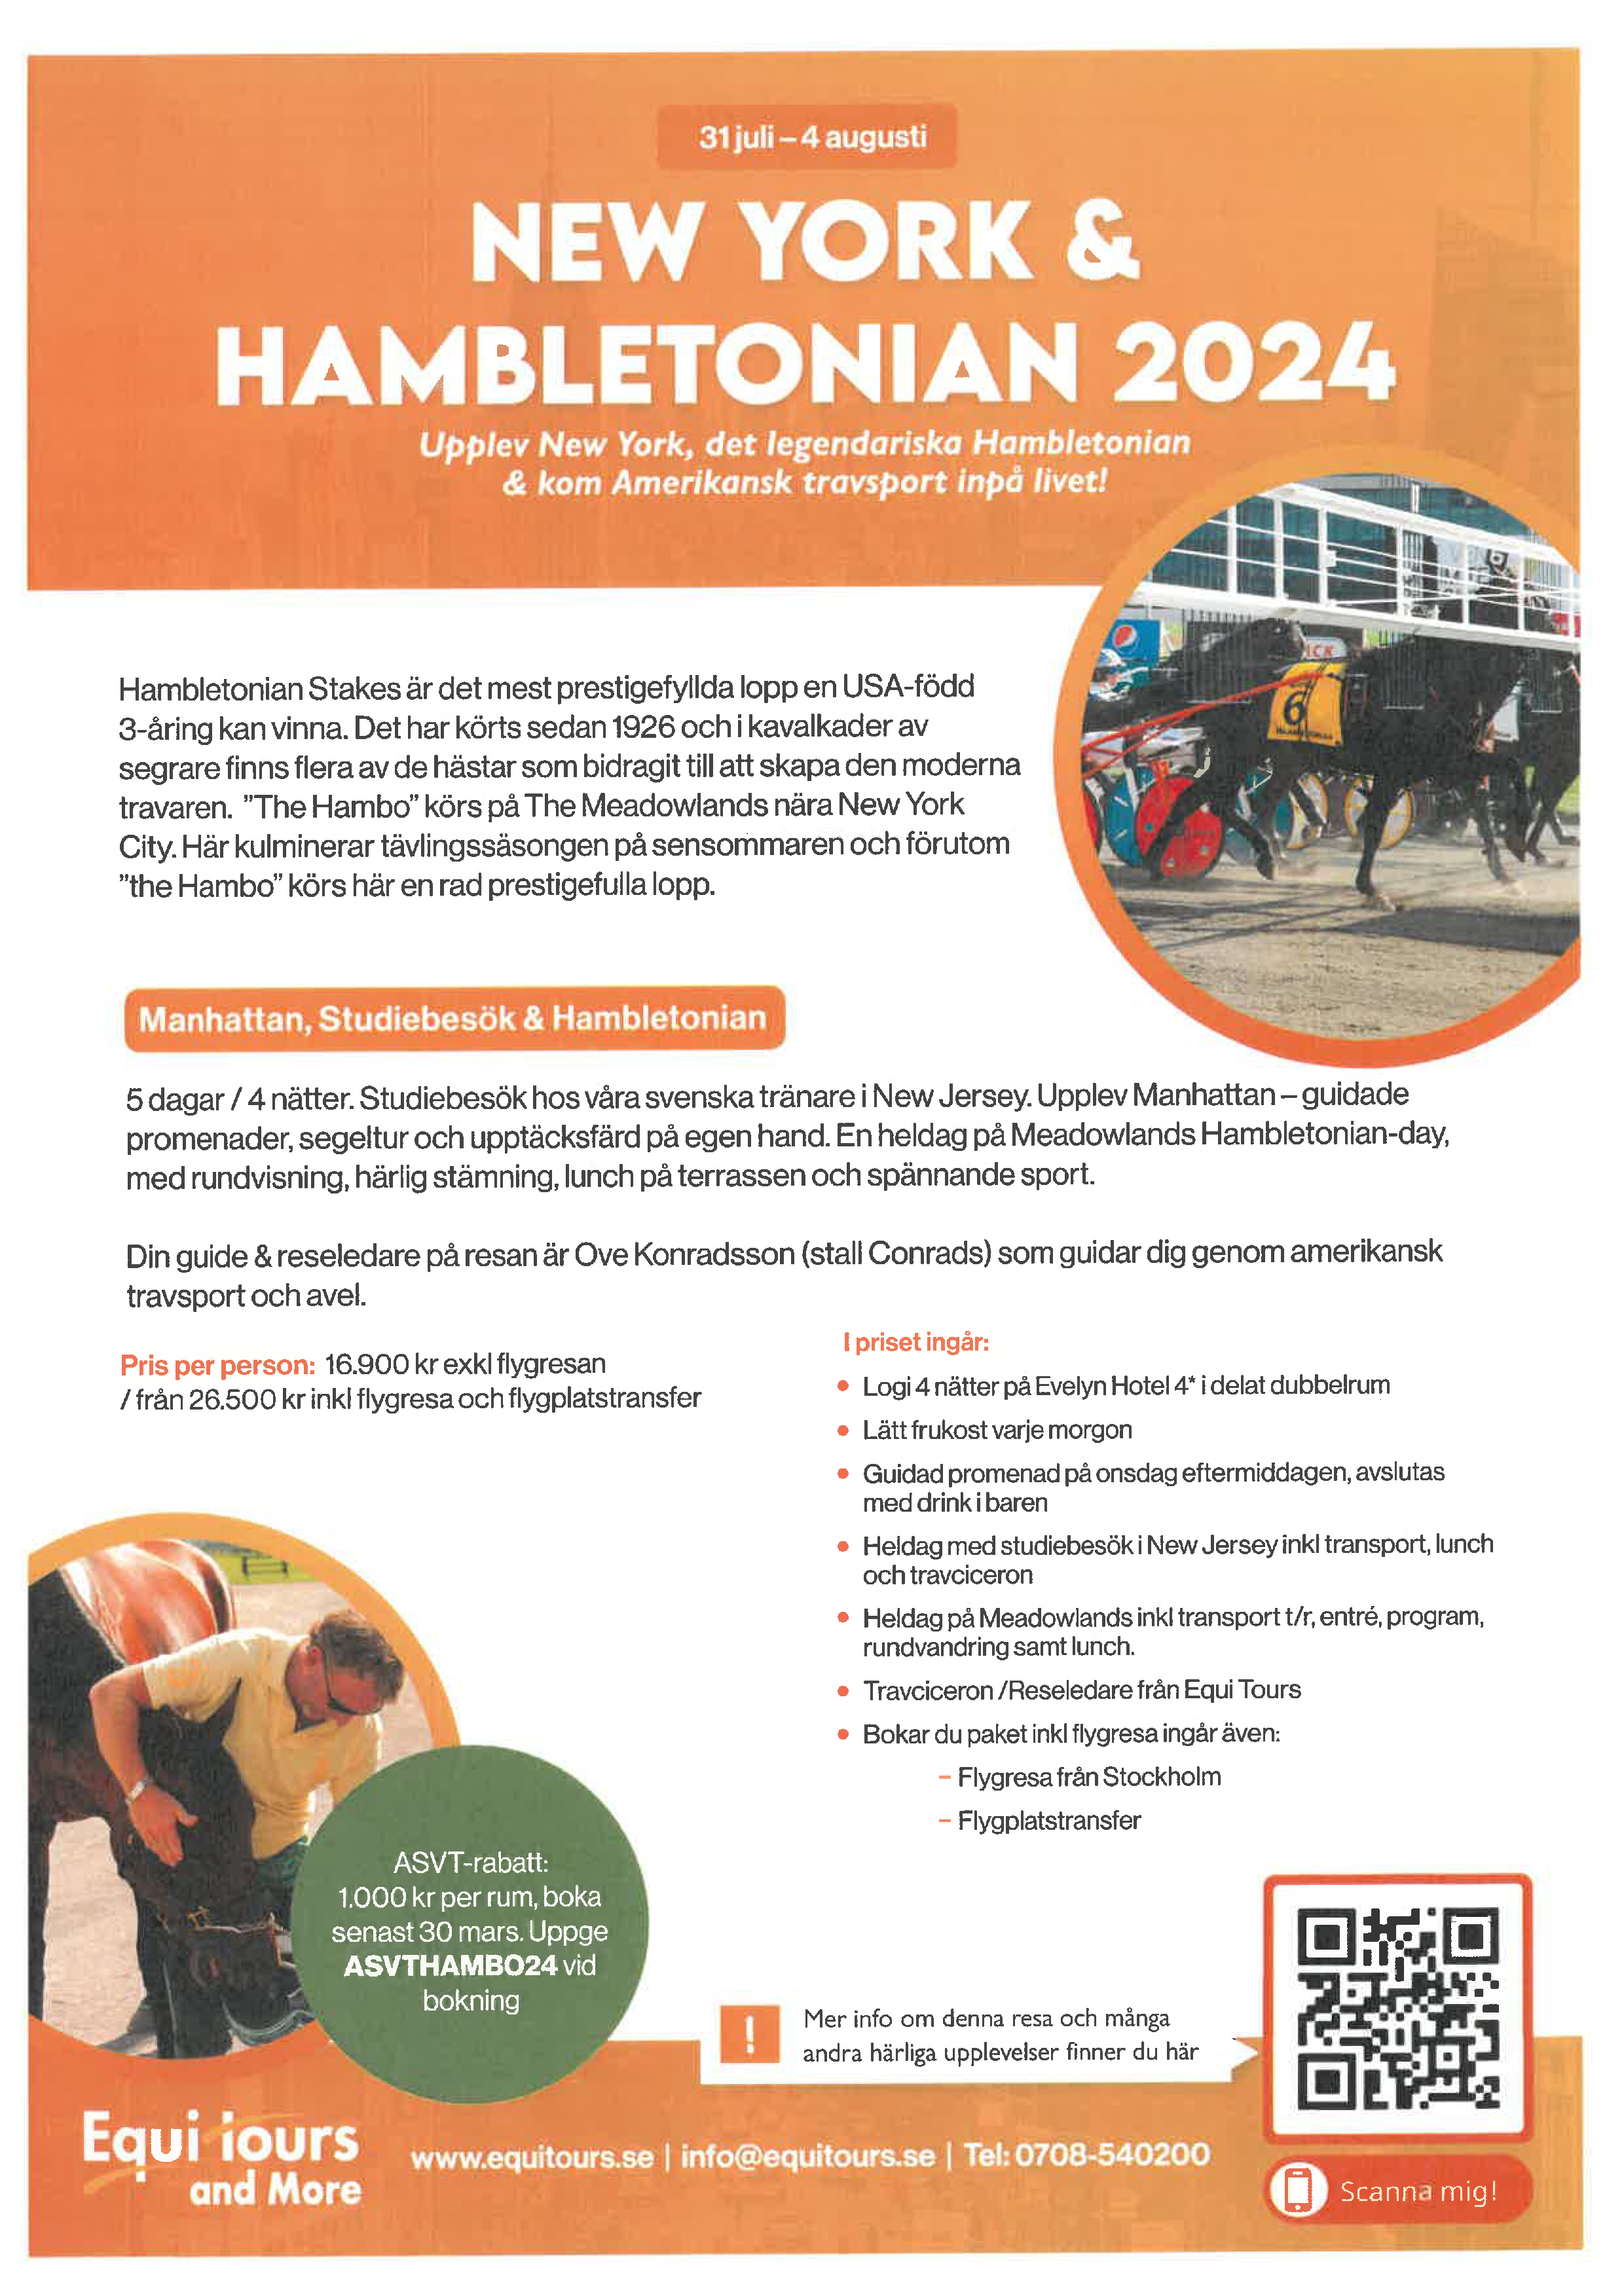 Hambletonian 2024